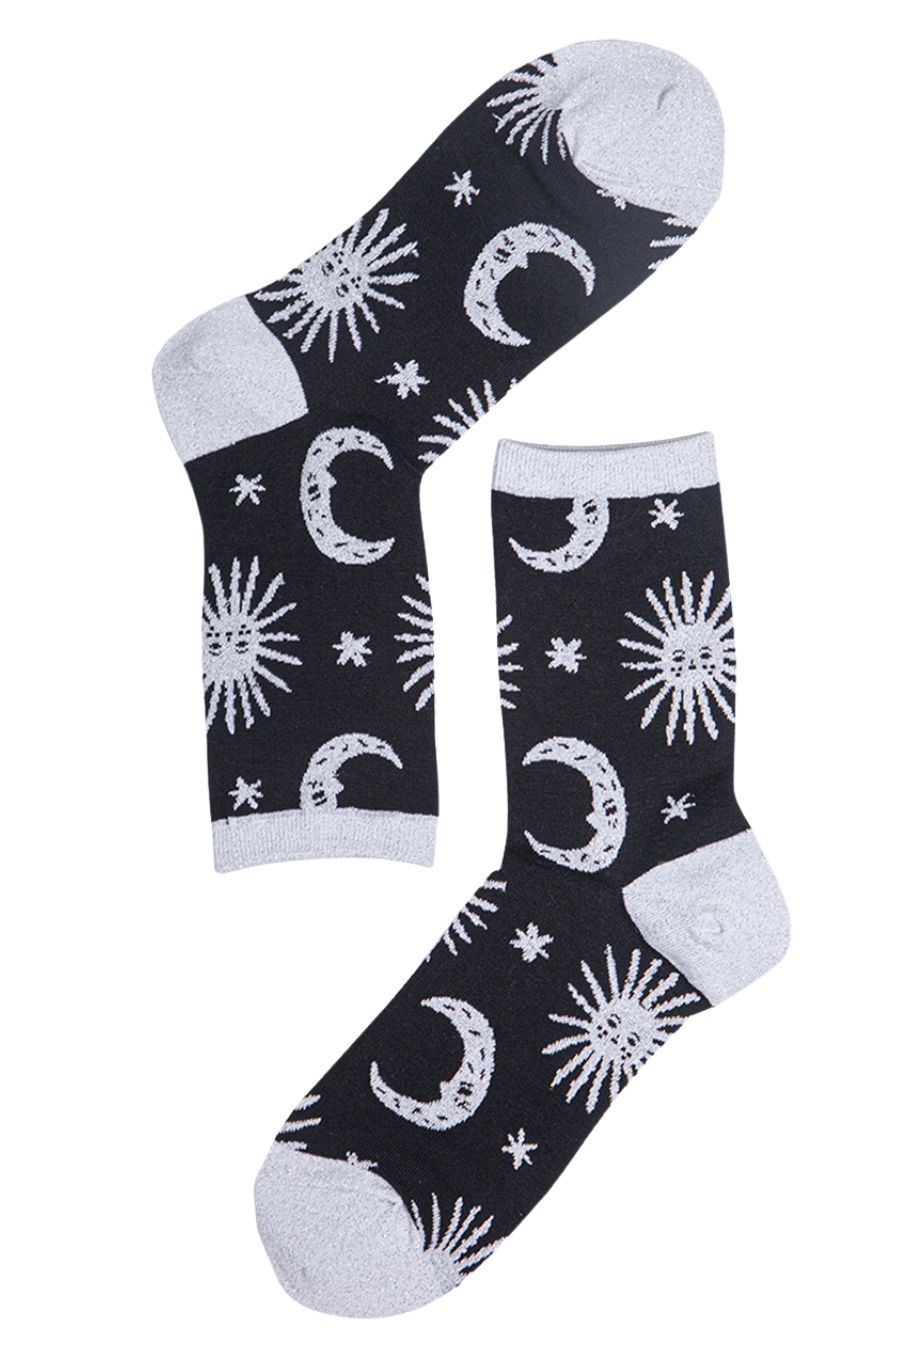 black, silver glitter socks with a celestial star moon print